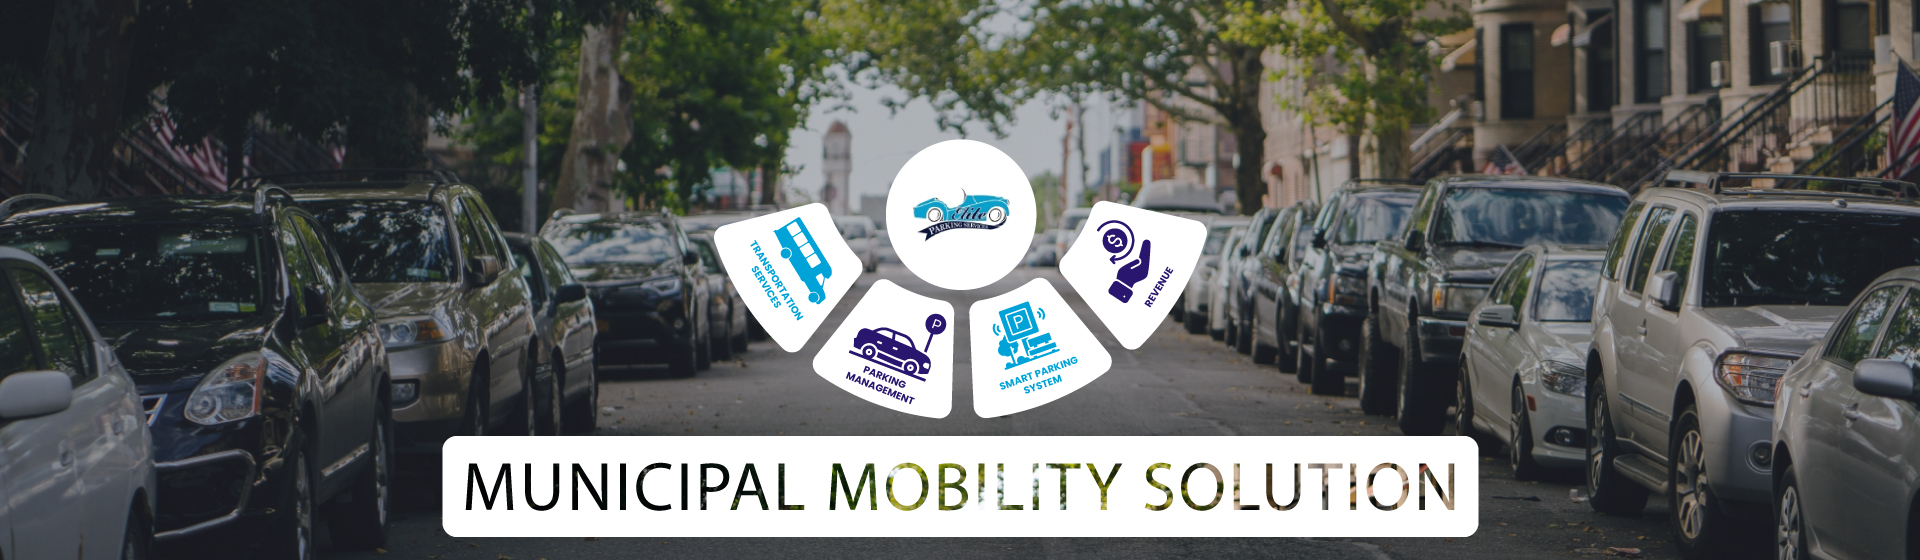 Streamlining Municipal Mobility: Why Modernizing City Parking is Key 